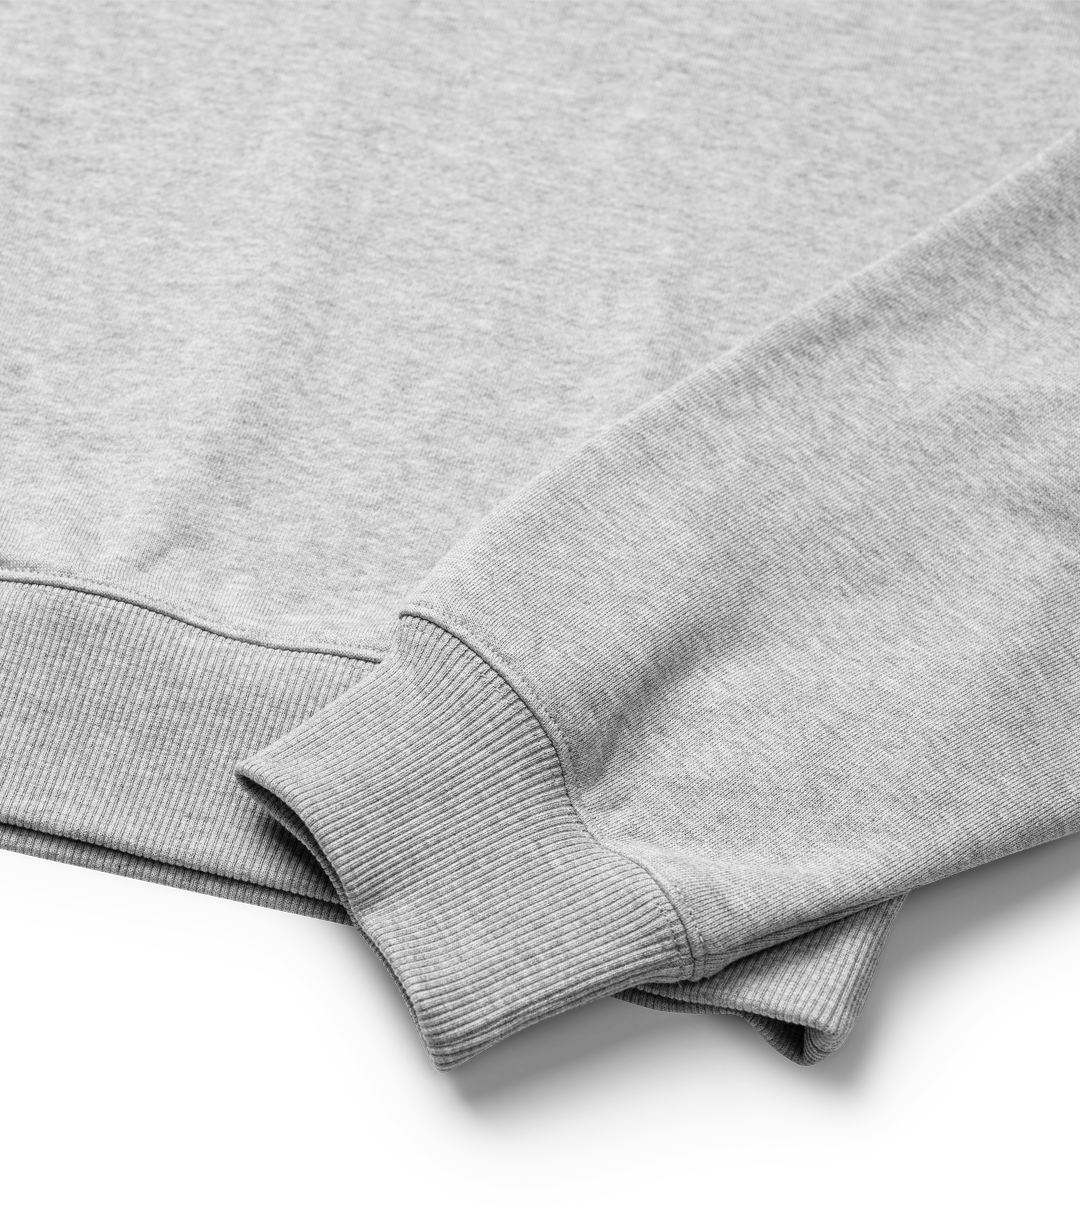 6 SIEGE - Ash Grey Sweatshirt